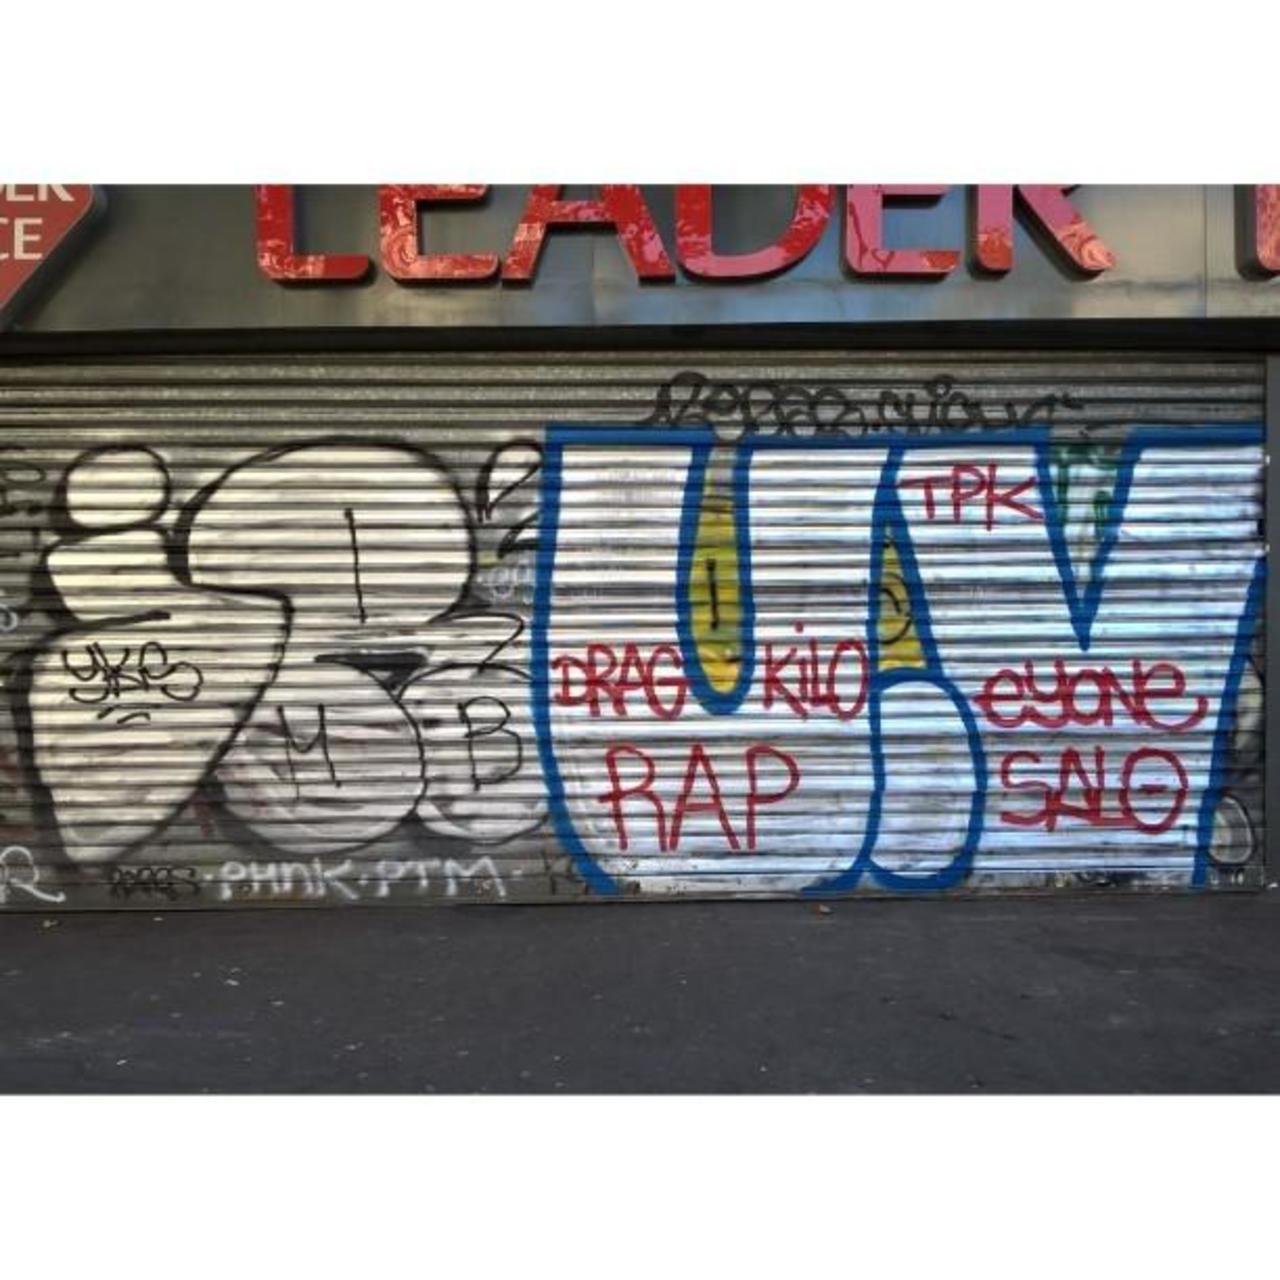 #streetart #graffiti #graff #art #fatcap #bombing #sprayart #spraycanart #wallart #handstyle #lettering #urbanart #… http://t.co/VYUVIu1eR0